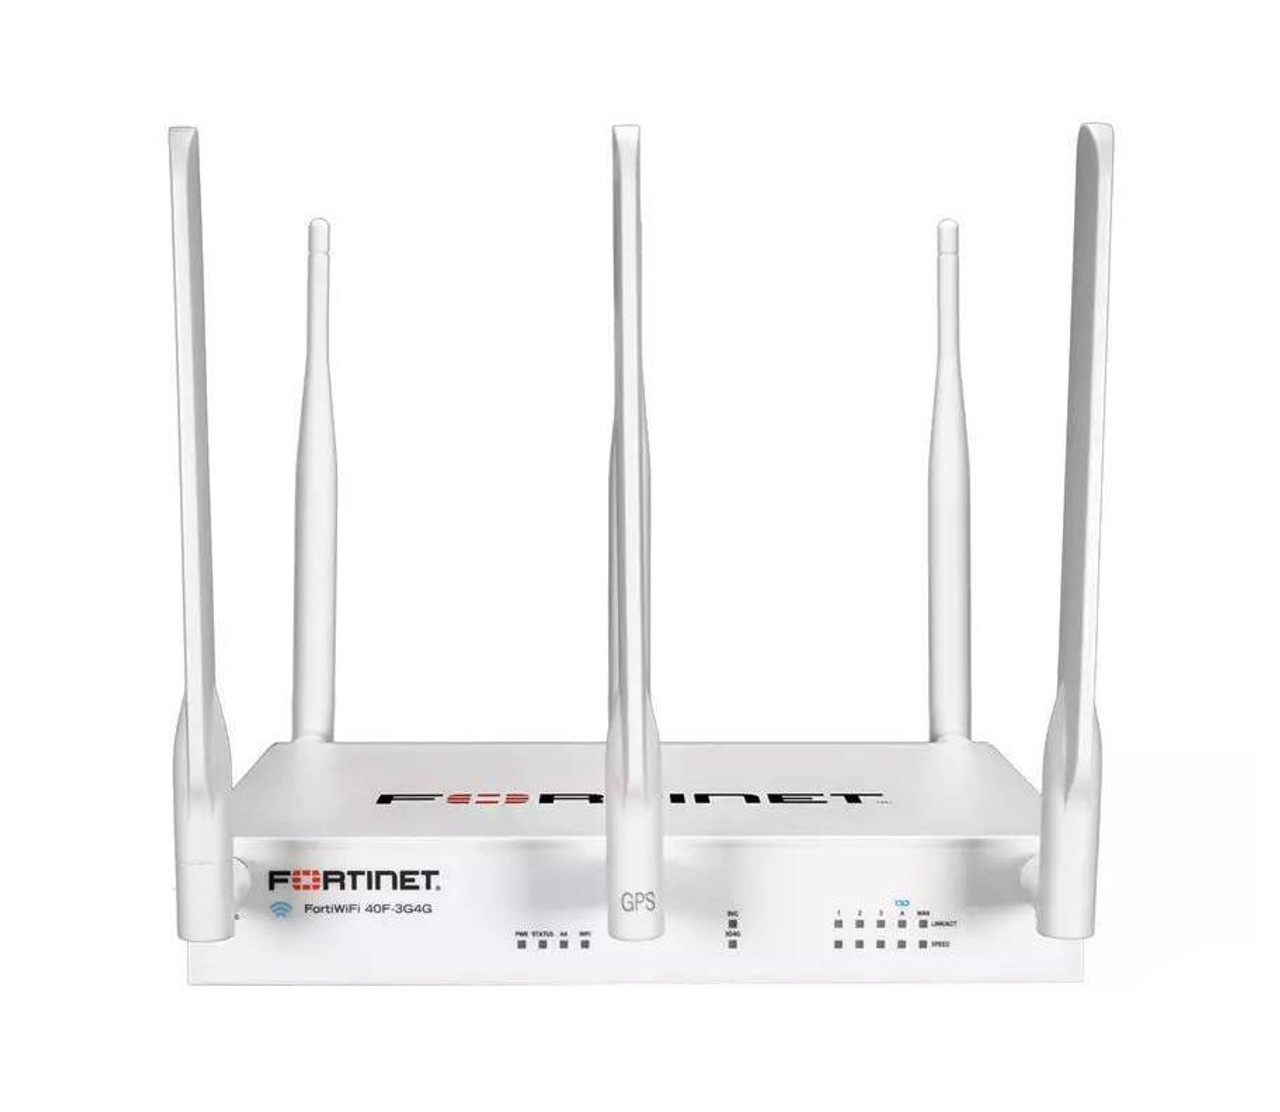 Fortinet FortiWifi FWF-40F Network Security/Firewall Appliance - 5 Port - 10/100/1000Base-T - Gigabit Ethernet - Wireless LAN IEEE 802.11ac - AES